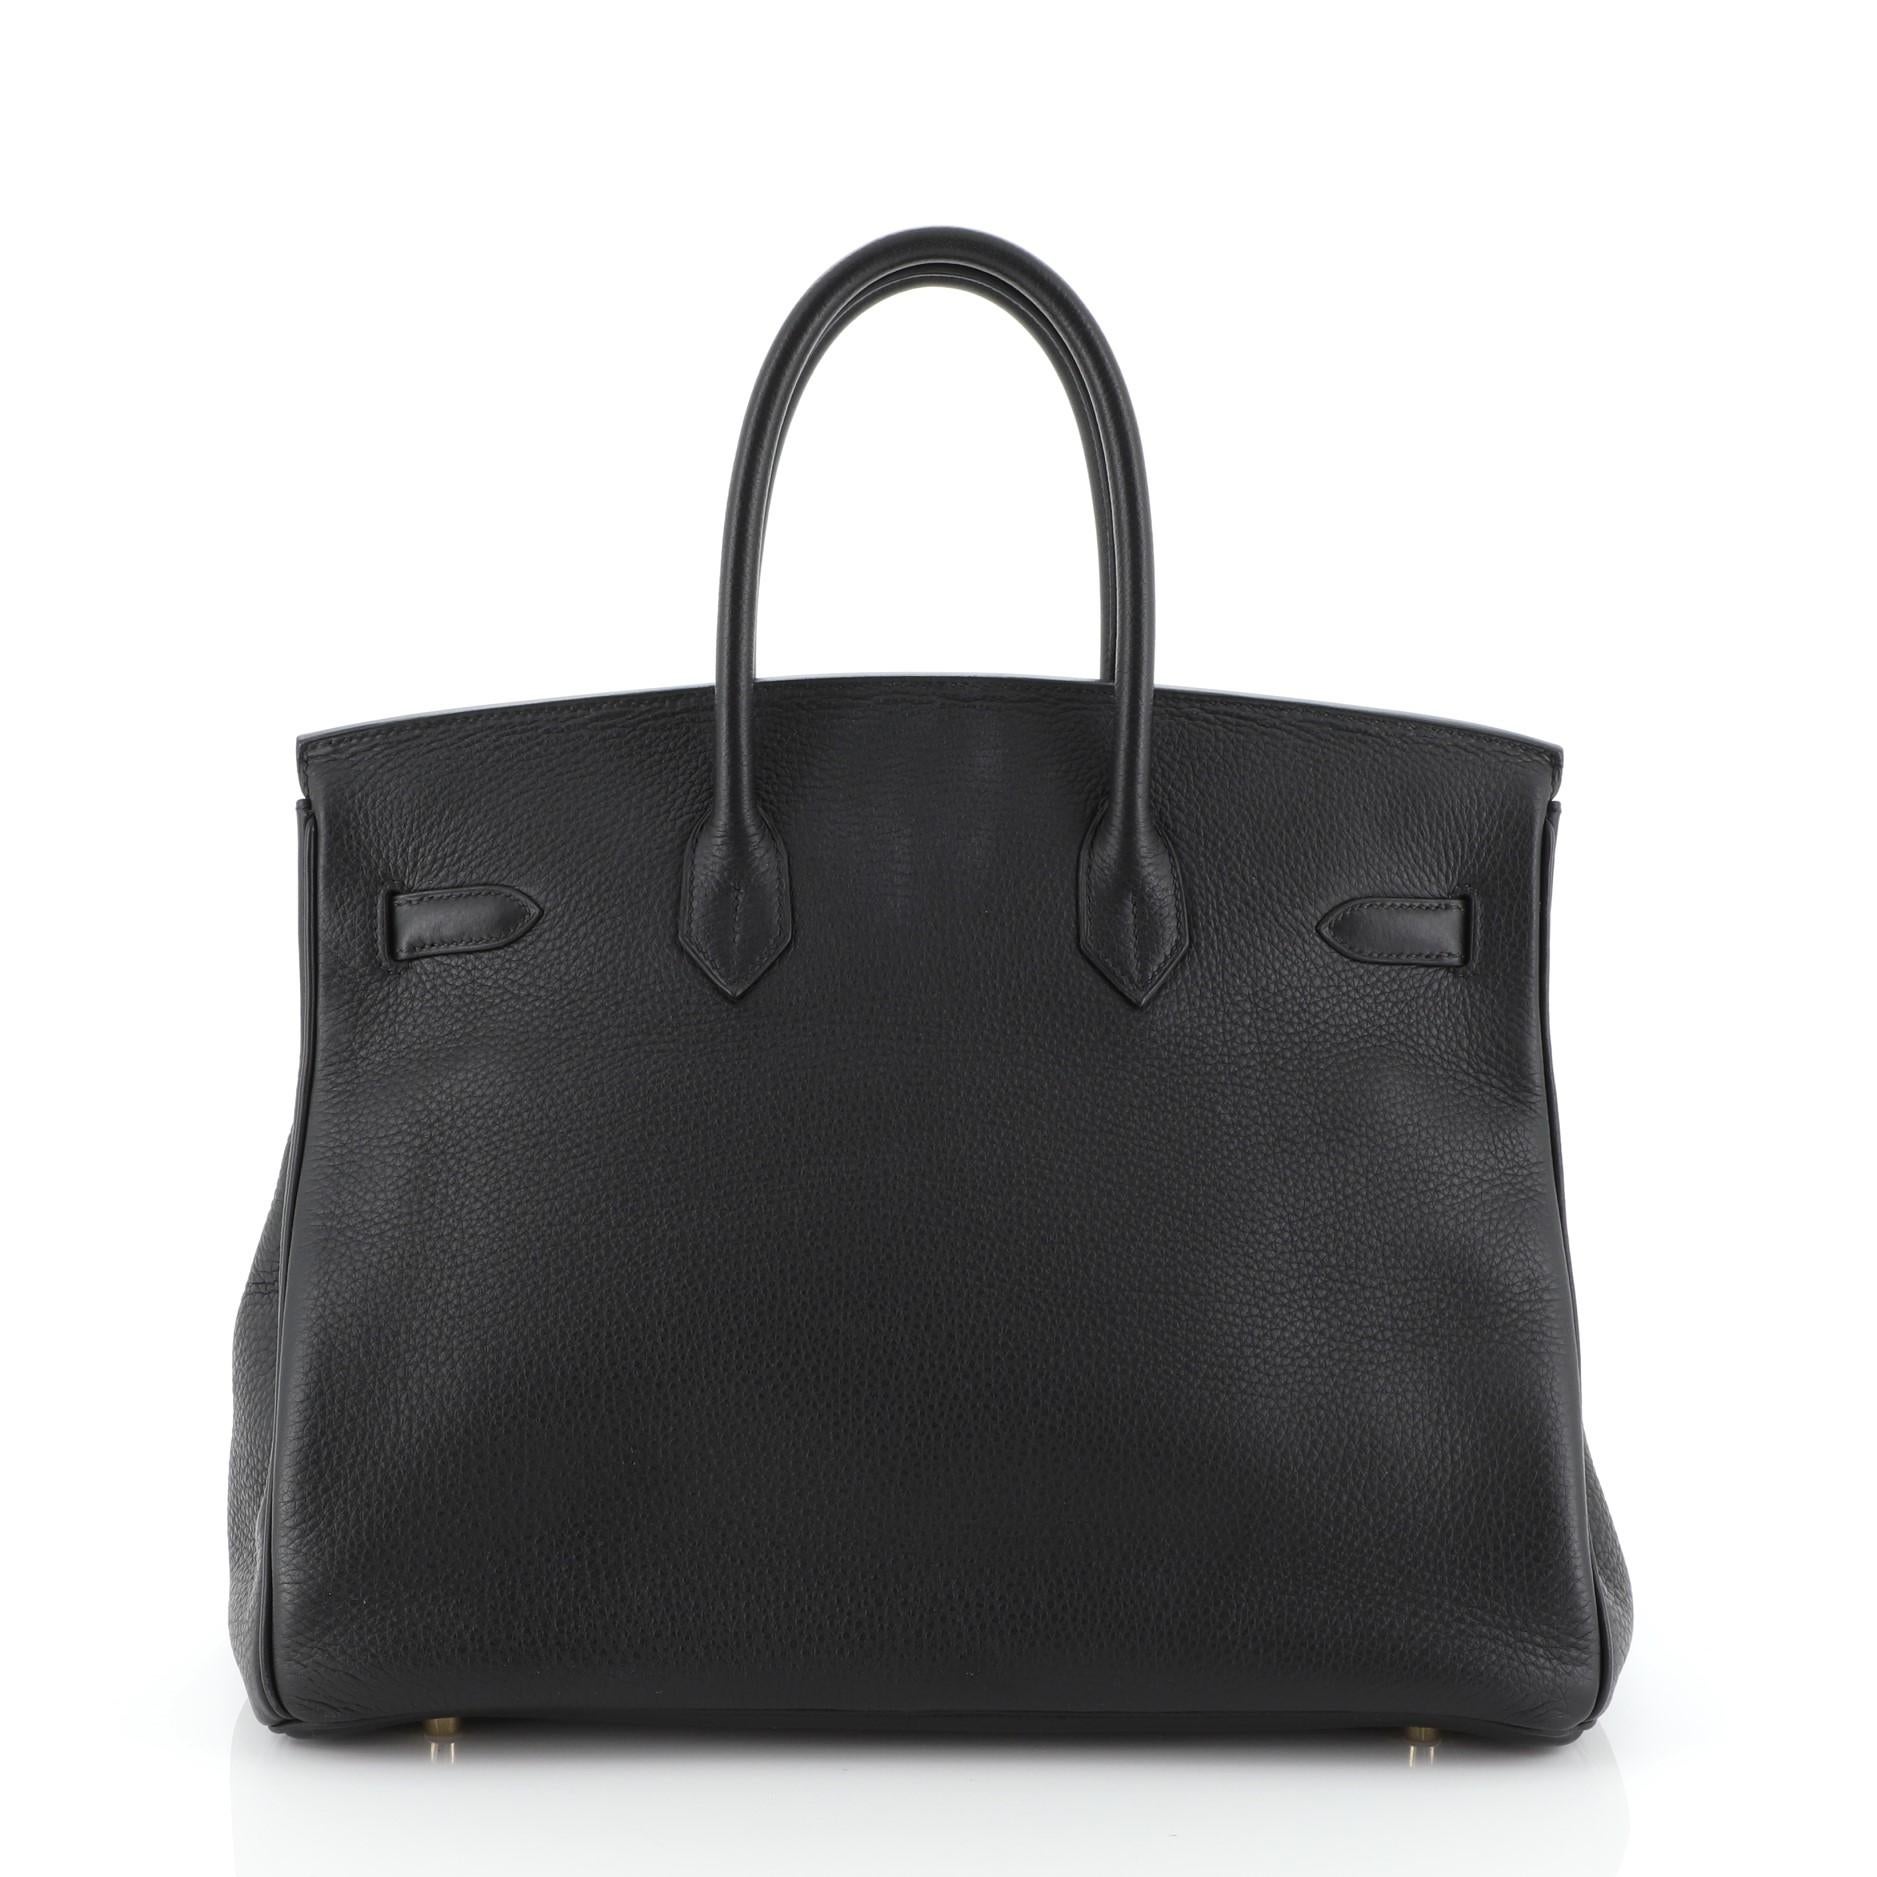 Black Hermes Birkin Handbag